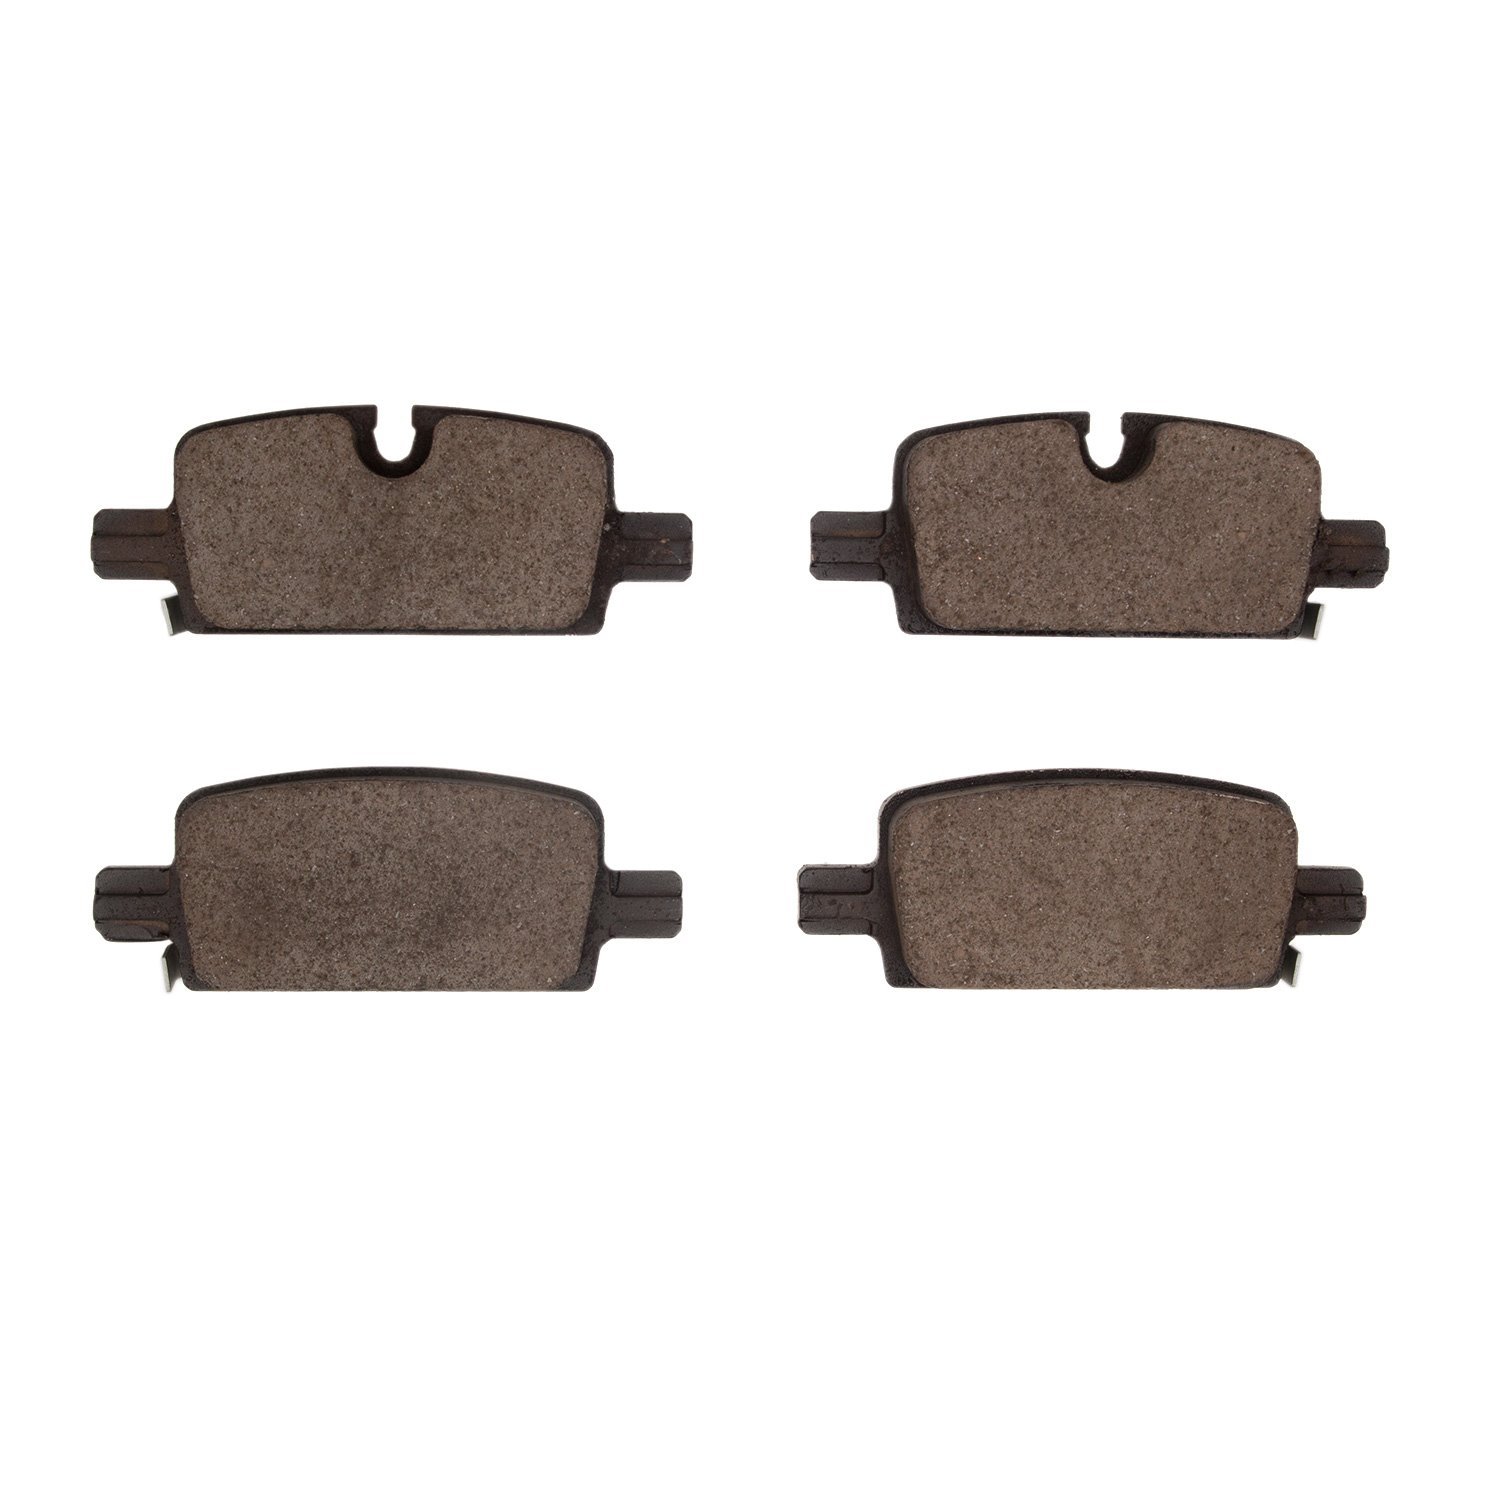 Ceramic Brake Pads, Fits Select Multiple Makes/Models, Position: Rear